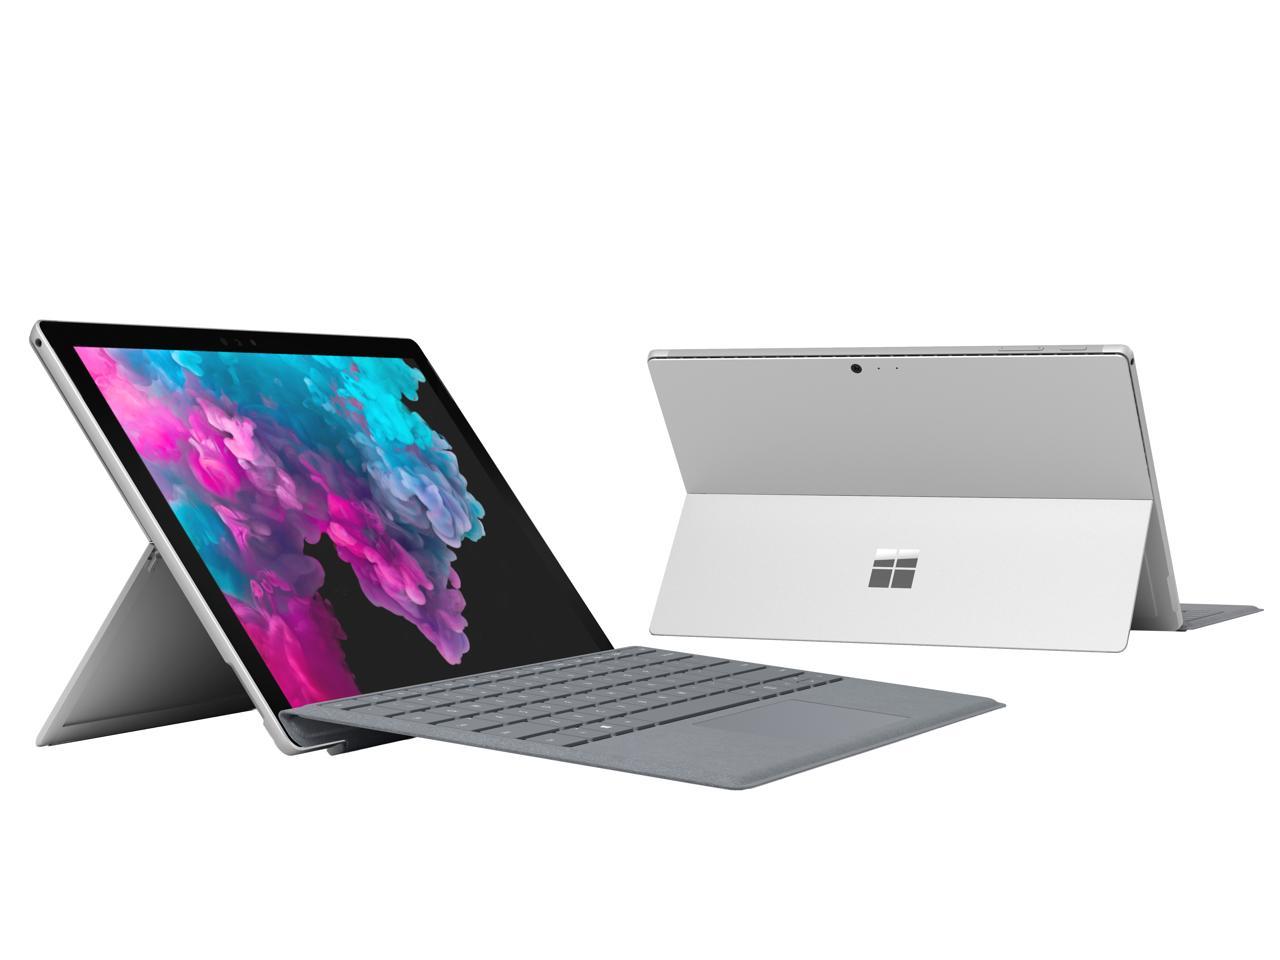 Microsoft Surface Pro 6 (LJK-00001) with Keyboard 2-in-1 Laptop